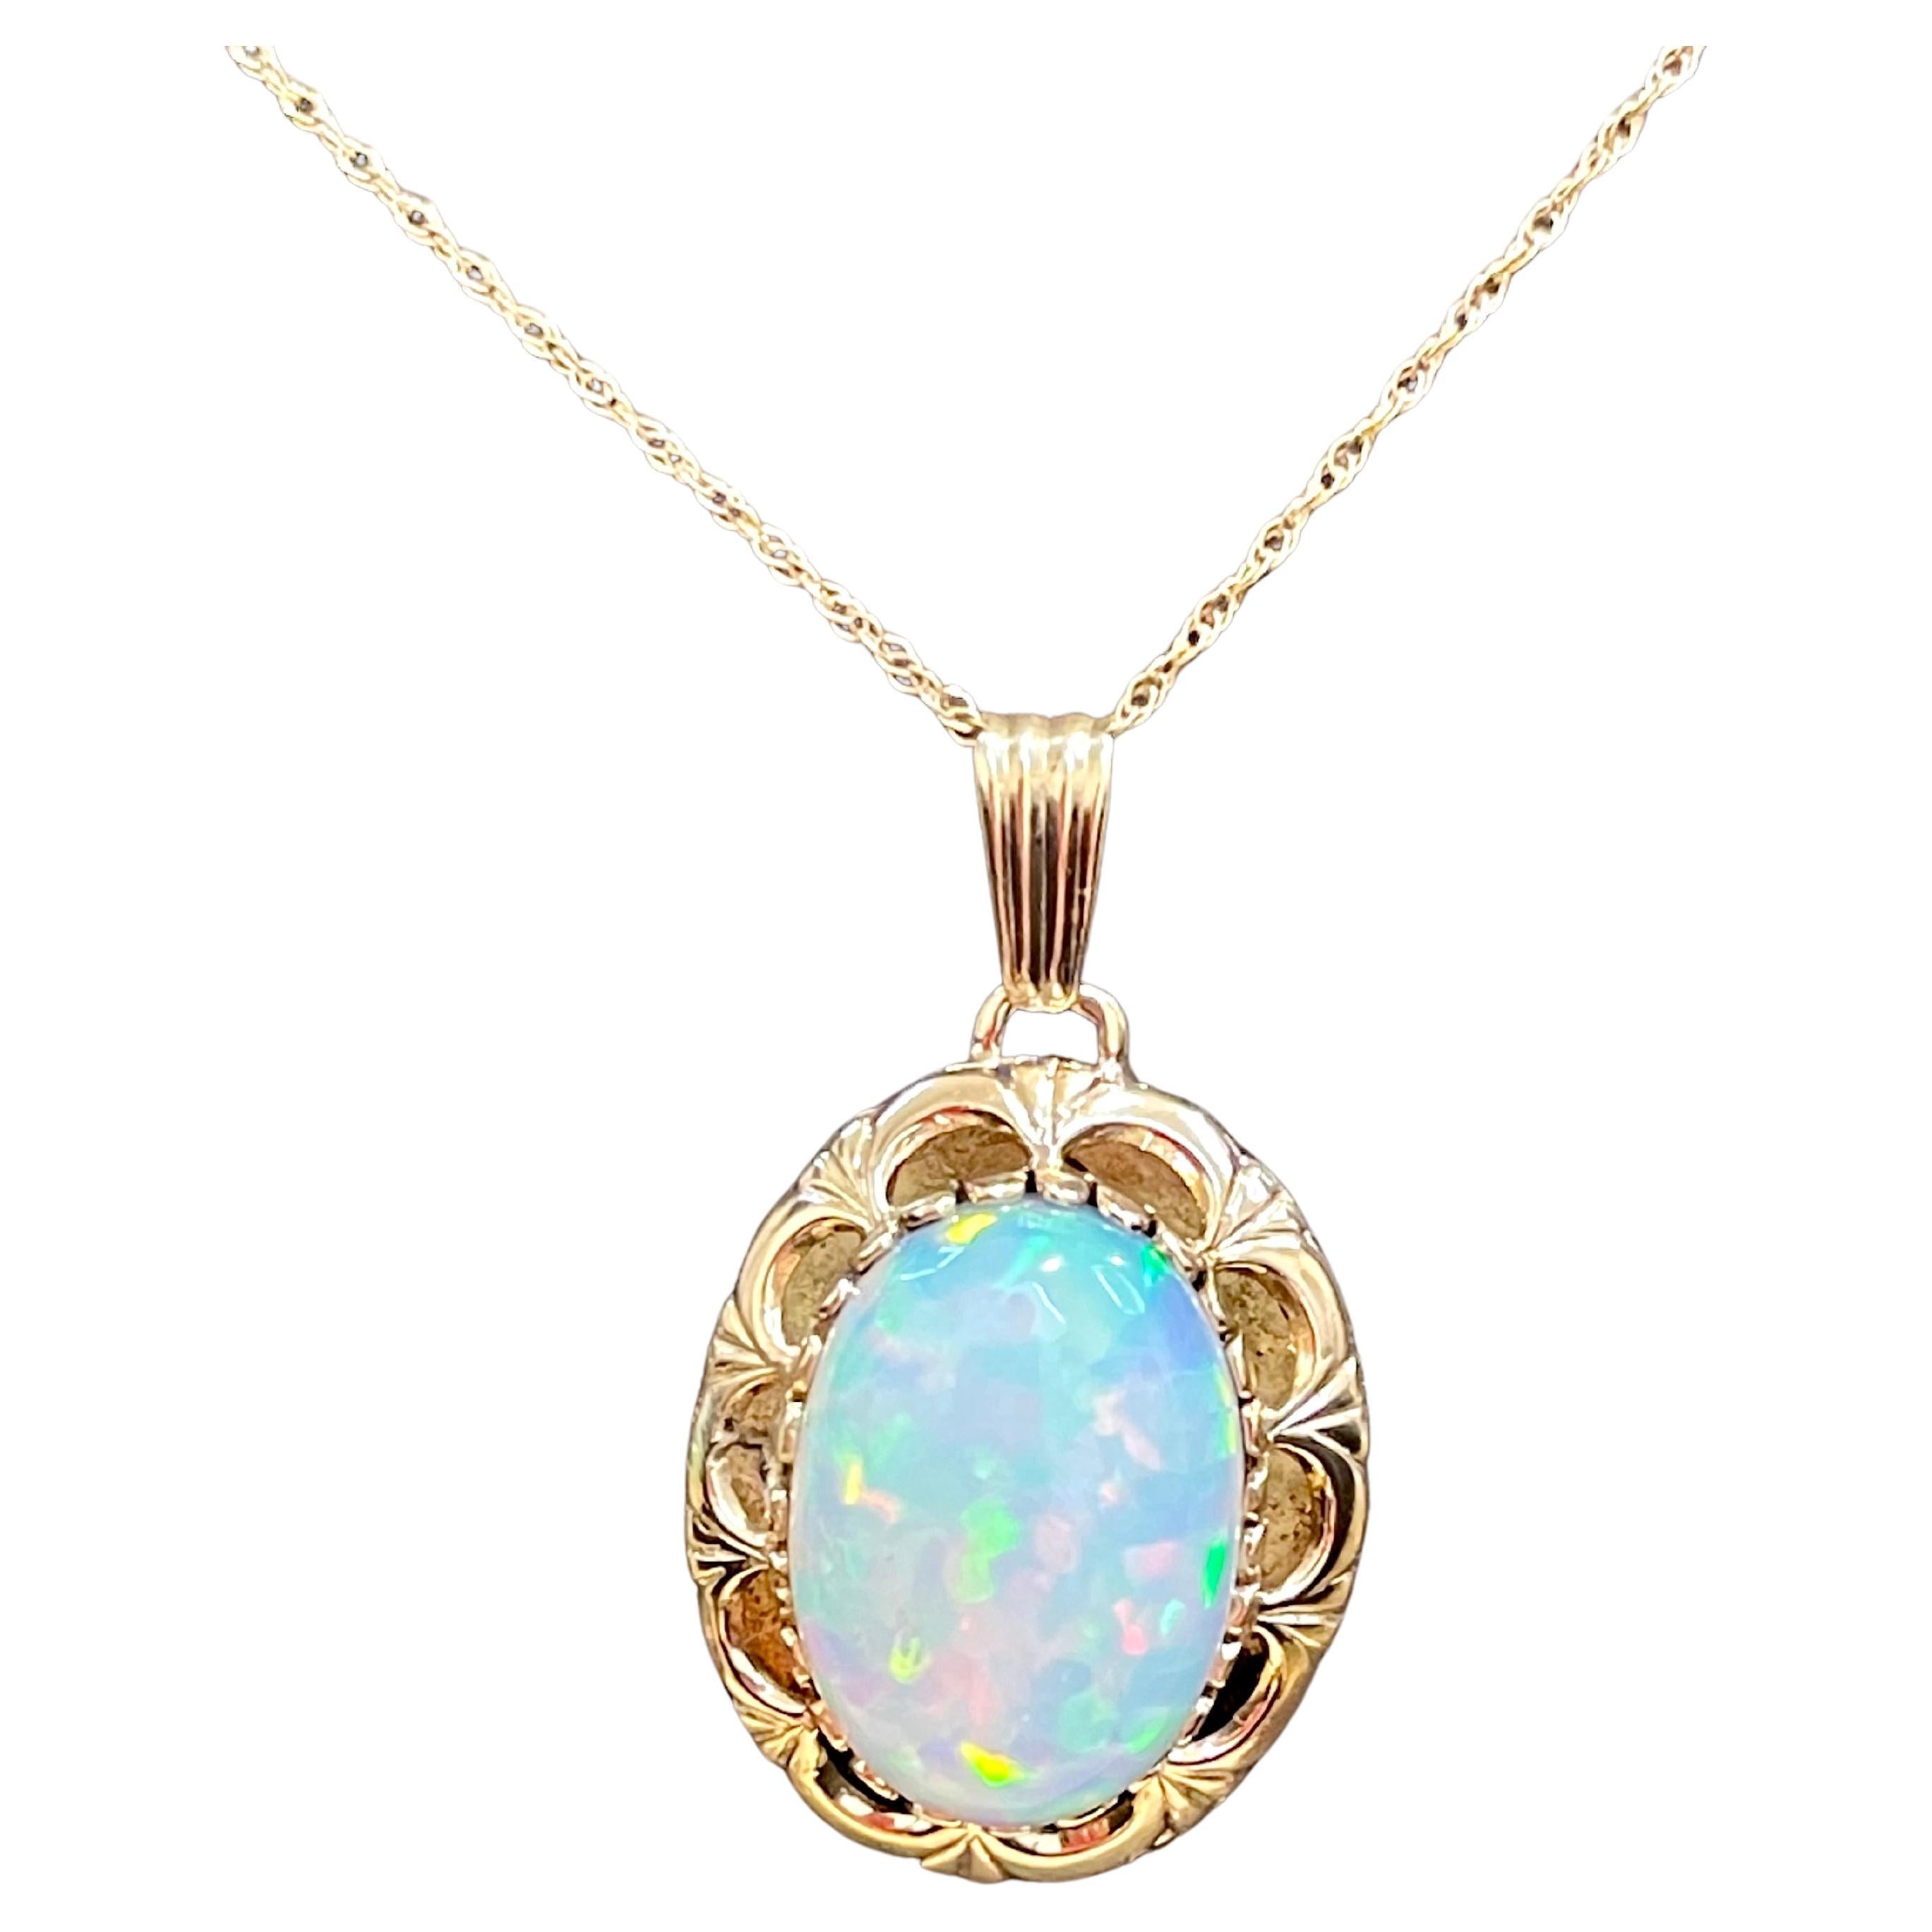 8 Carat Oval Ethiopian Opal Pendant / Necklace 14 Karat Yellow Gold Necklace